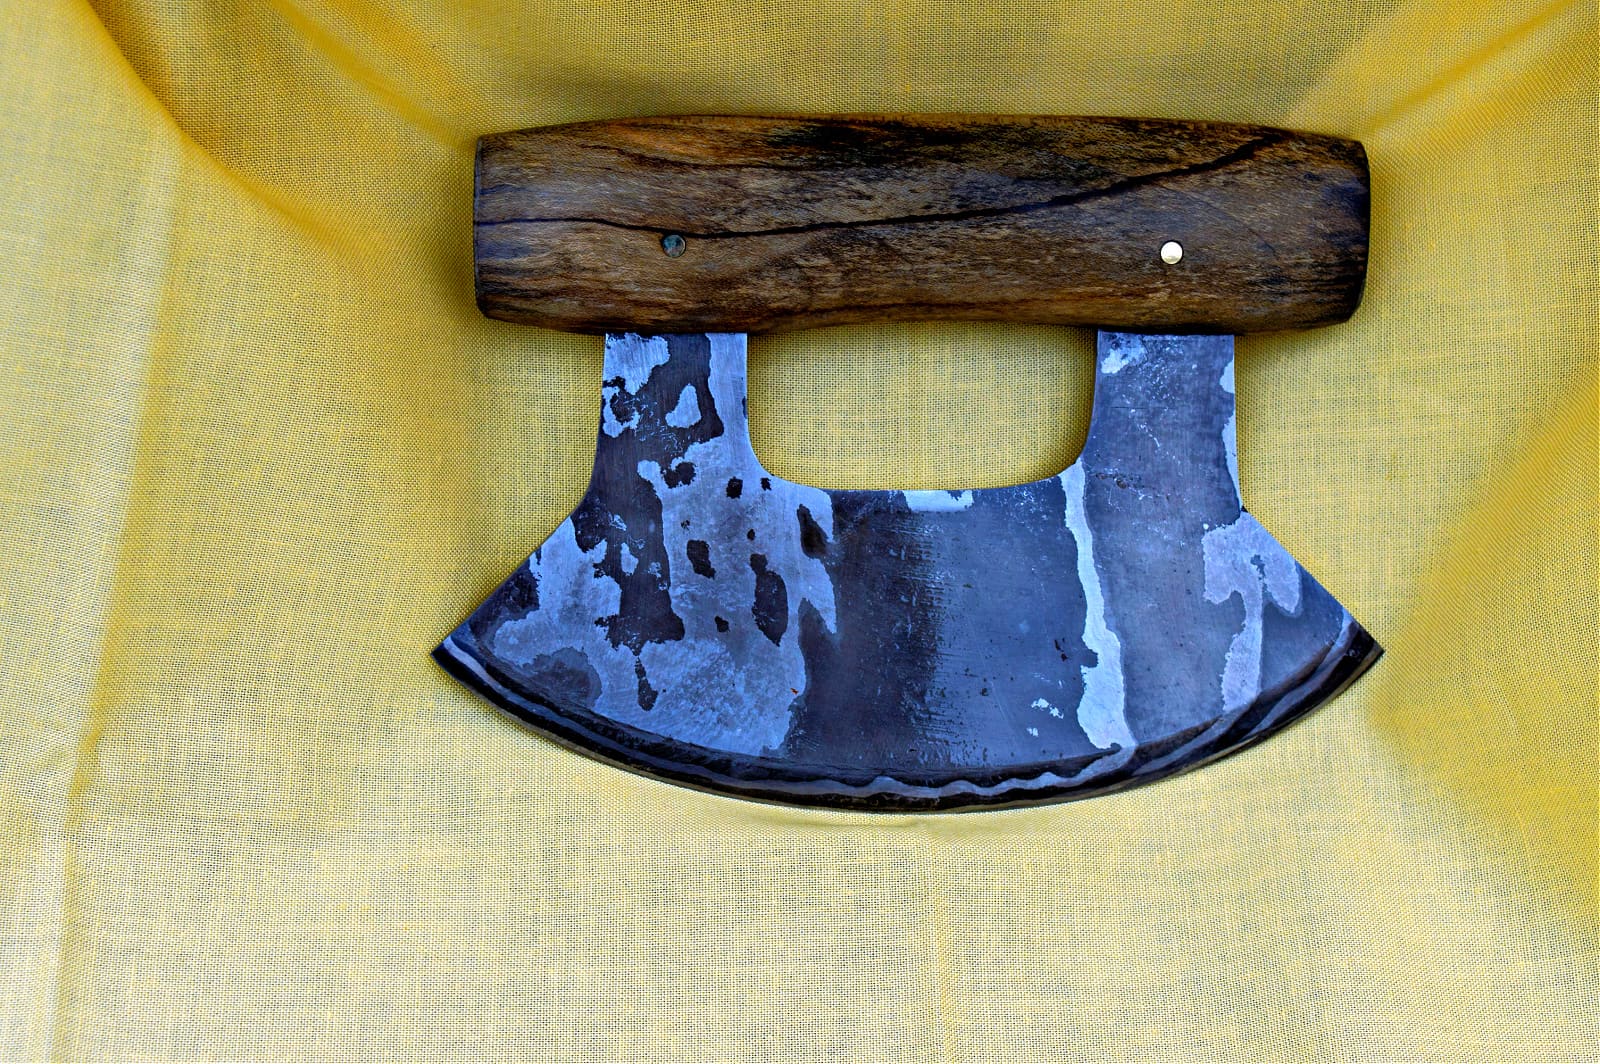 The ulu knife has an Alaskan history. 